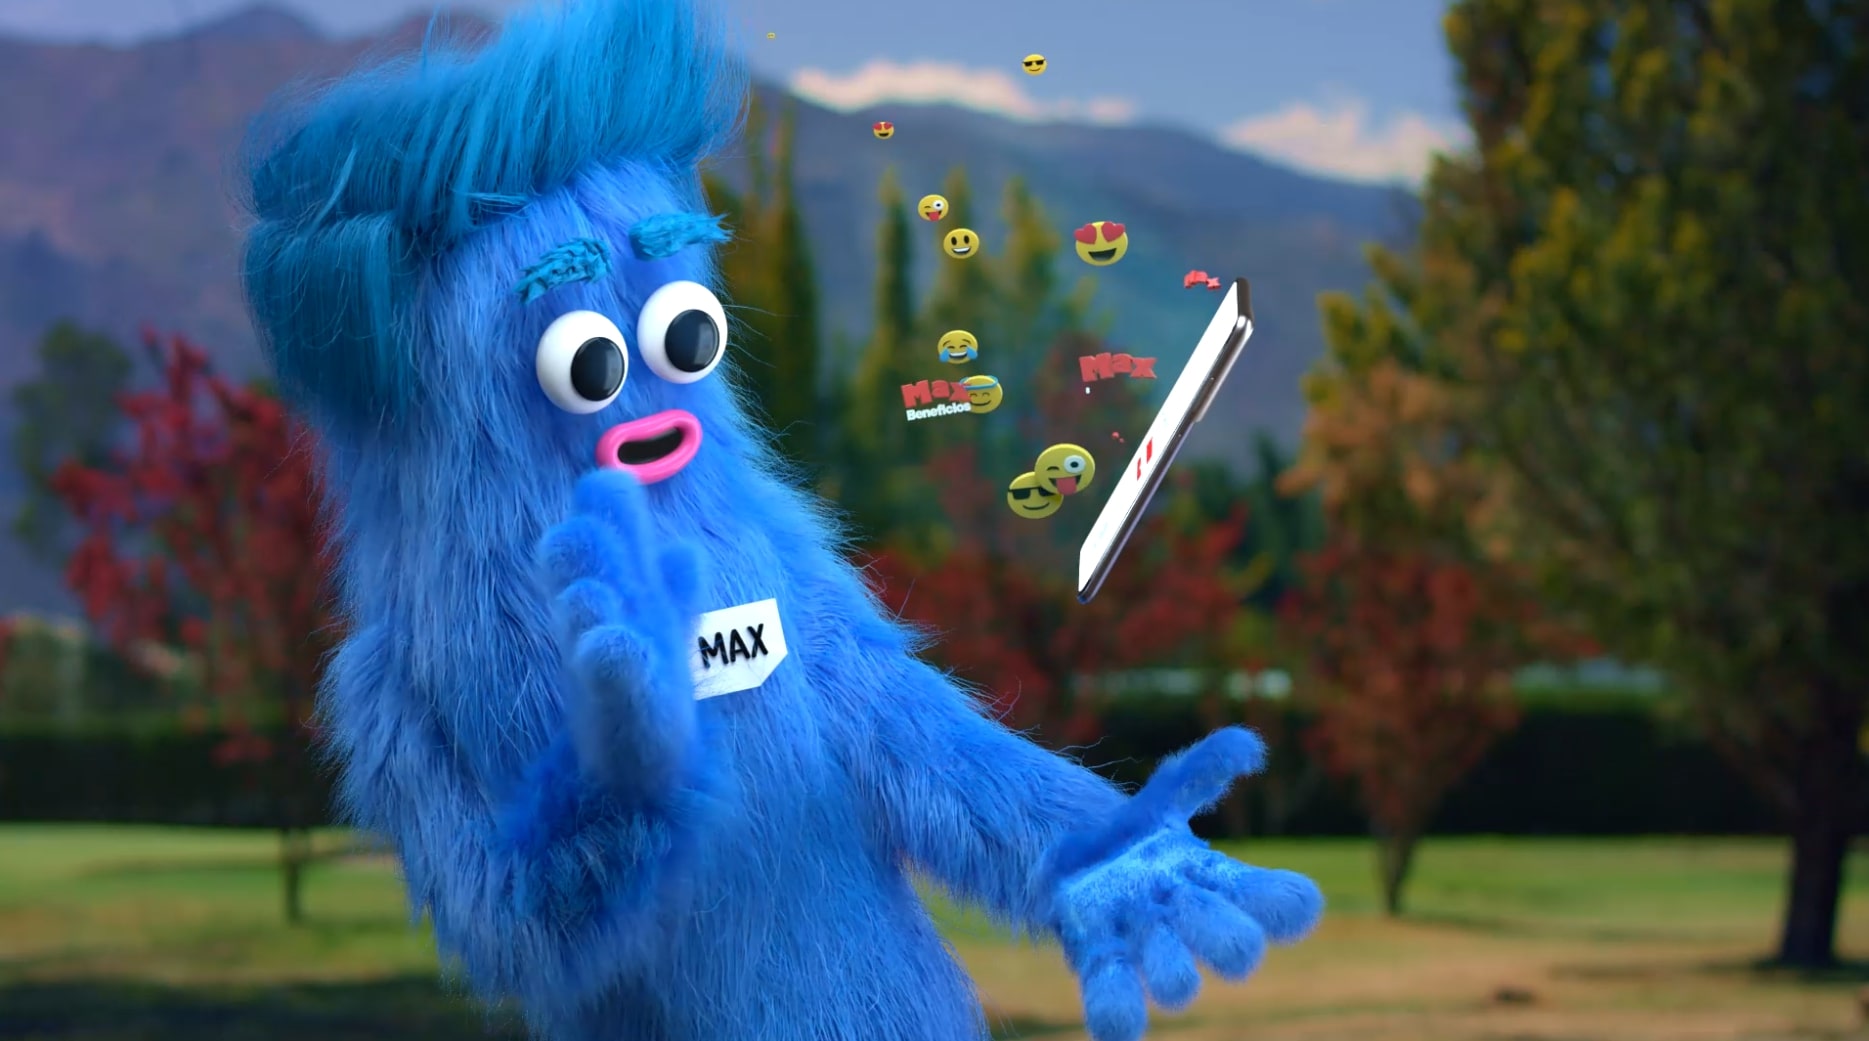 Entel’s tech-savvy new mascot MAX